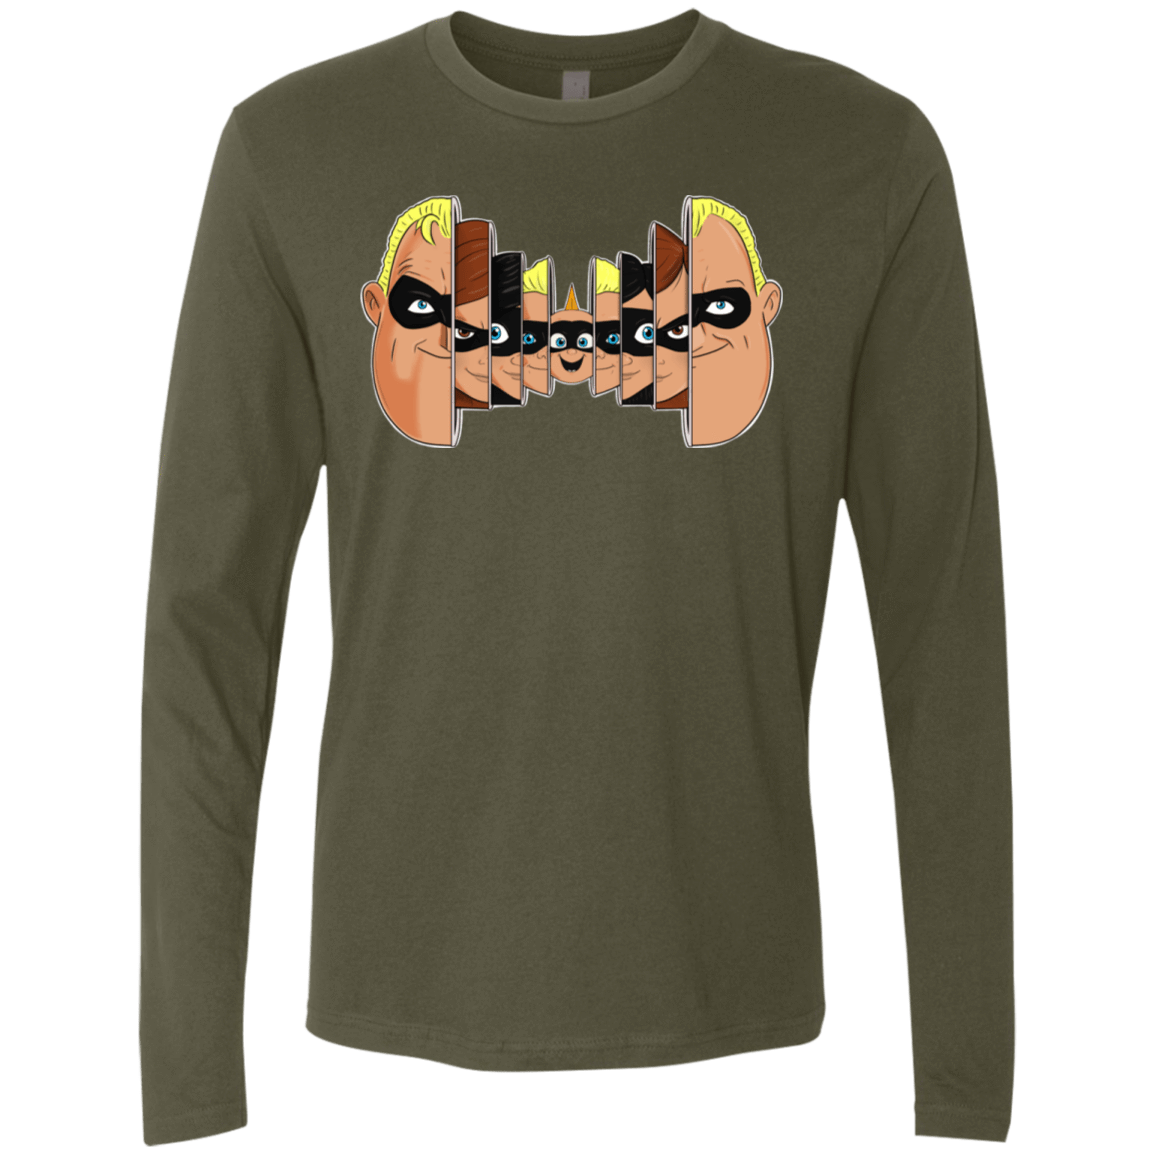 T-Shirts Military Green / S Incredibles Men's Premium Long Sleeve